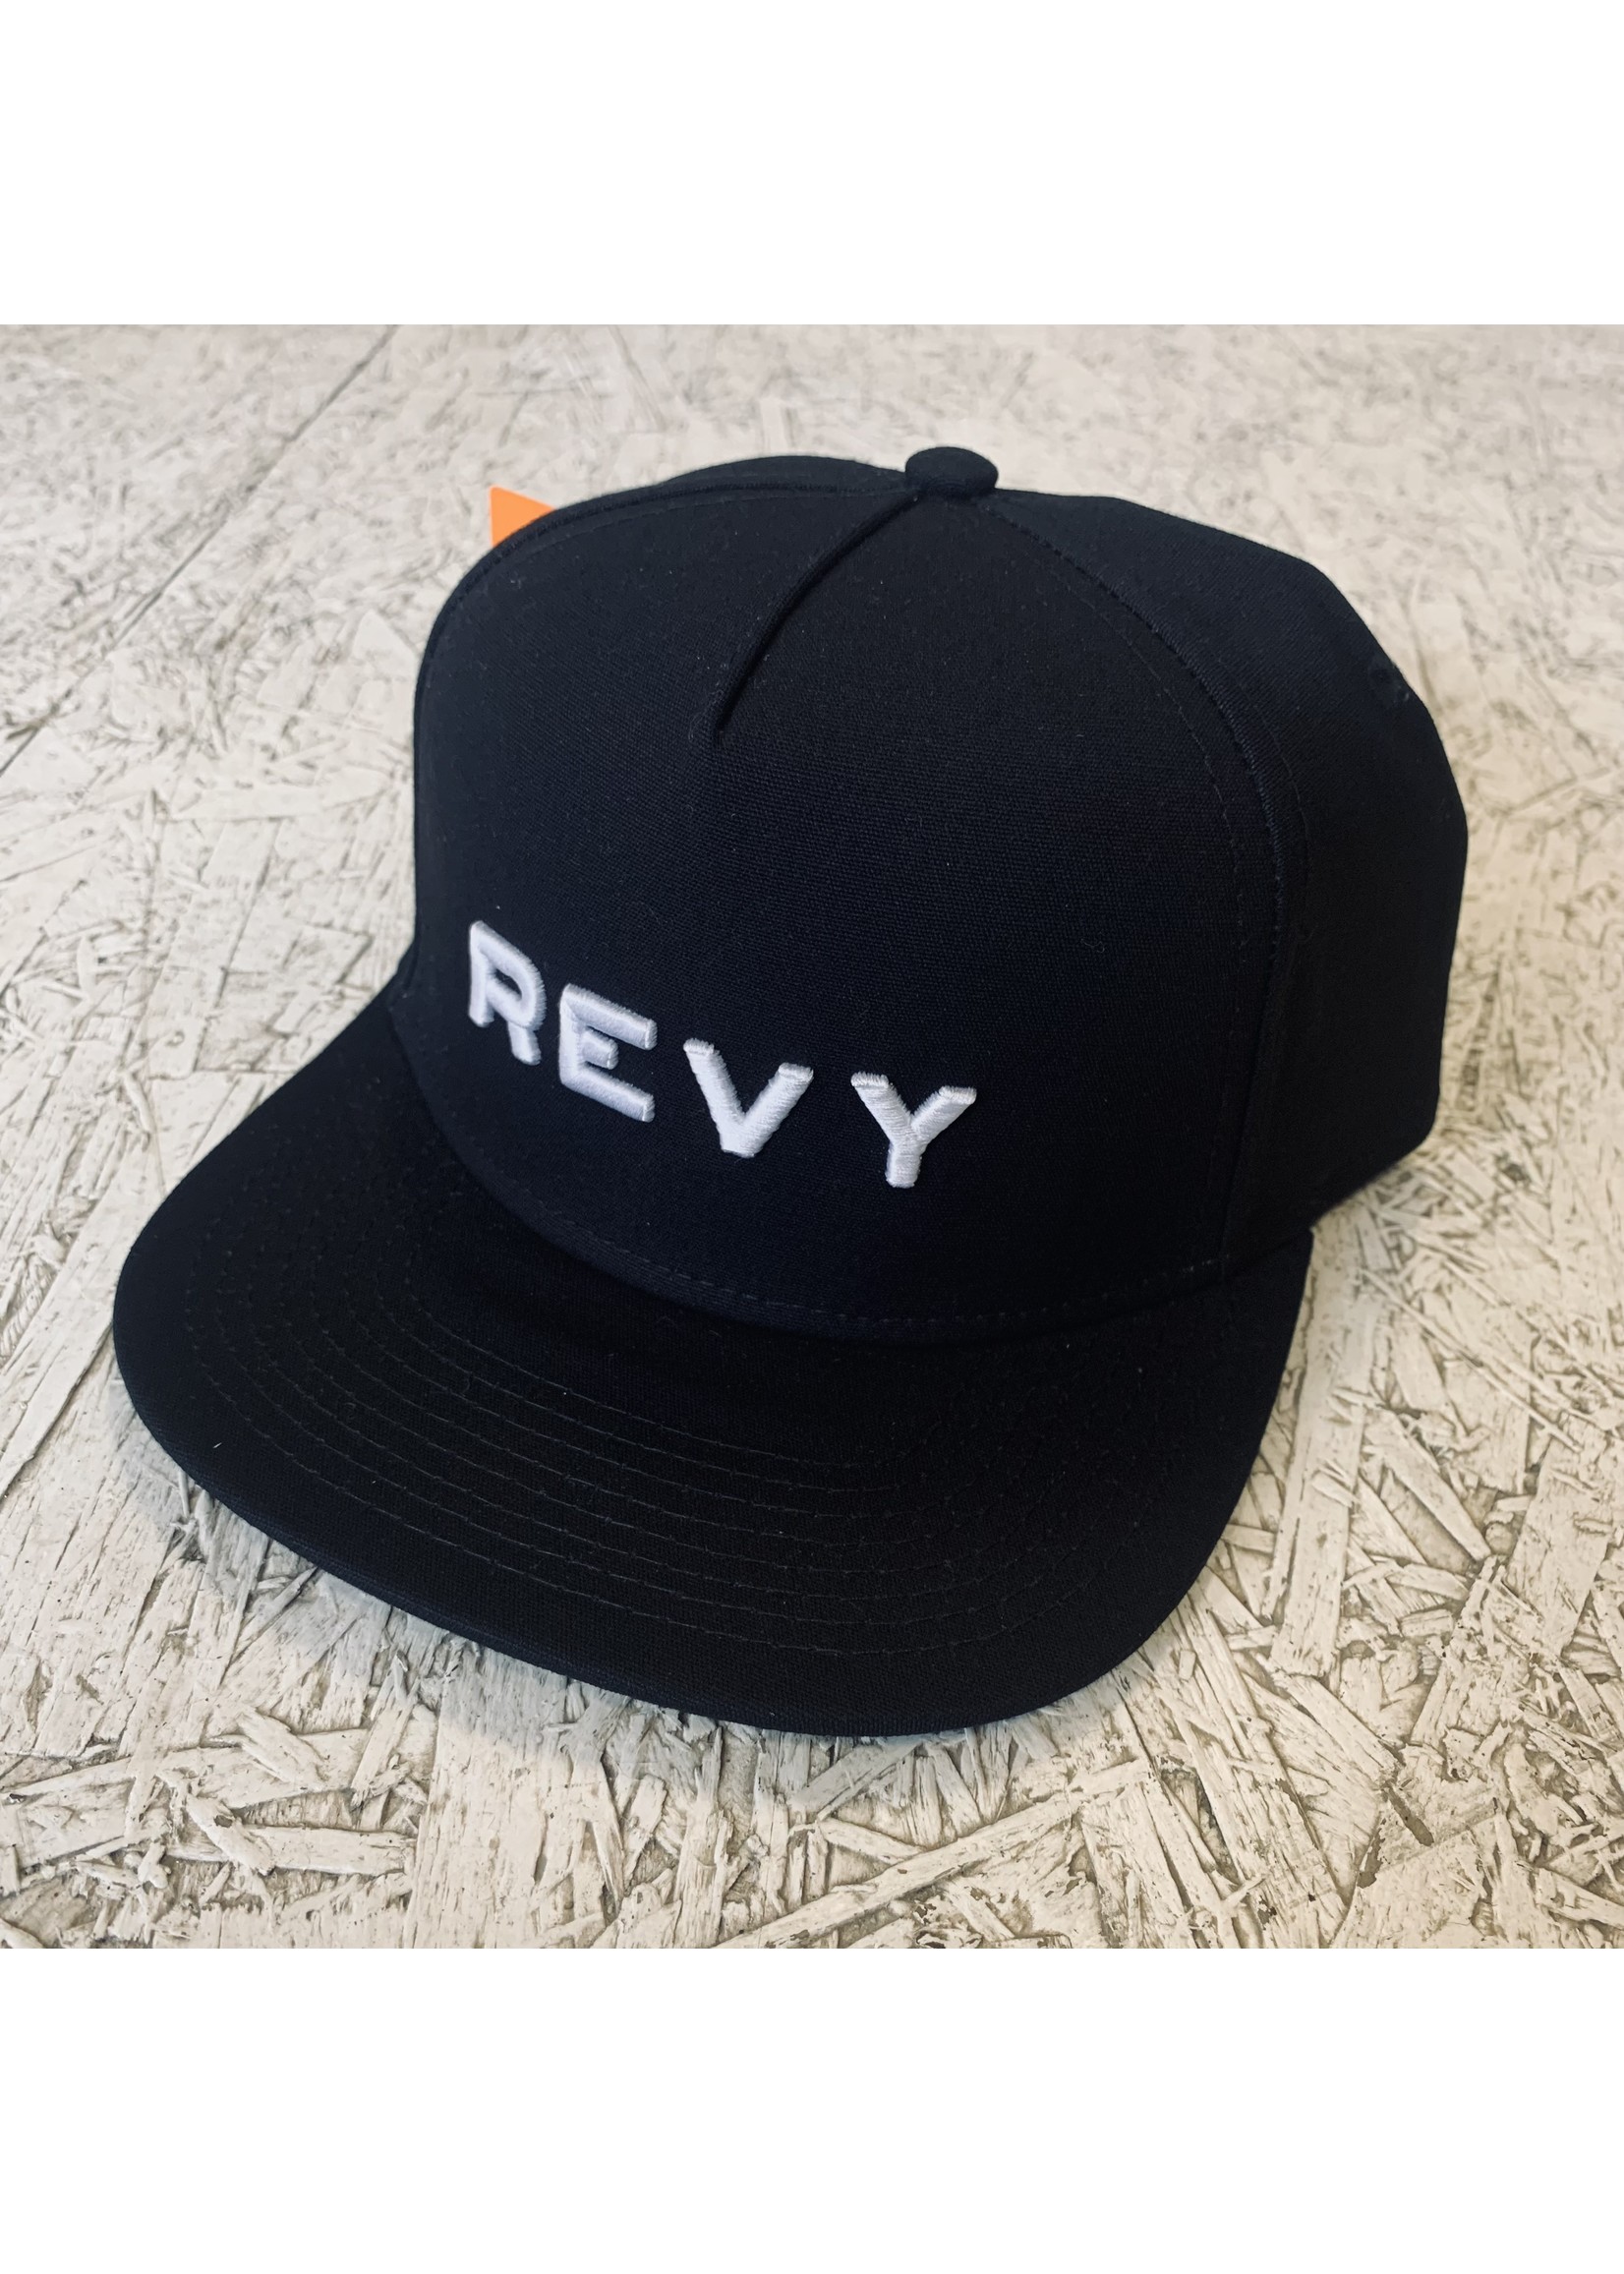 Trading Co. Revelstoke - Revy Eco Cap - Black